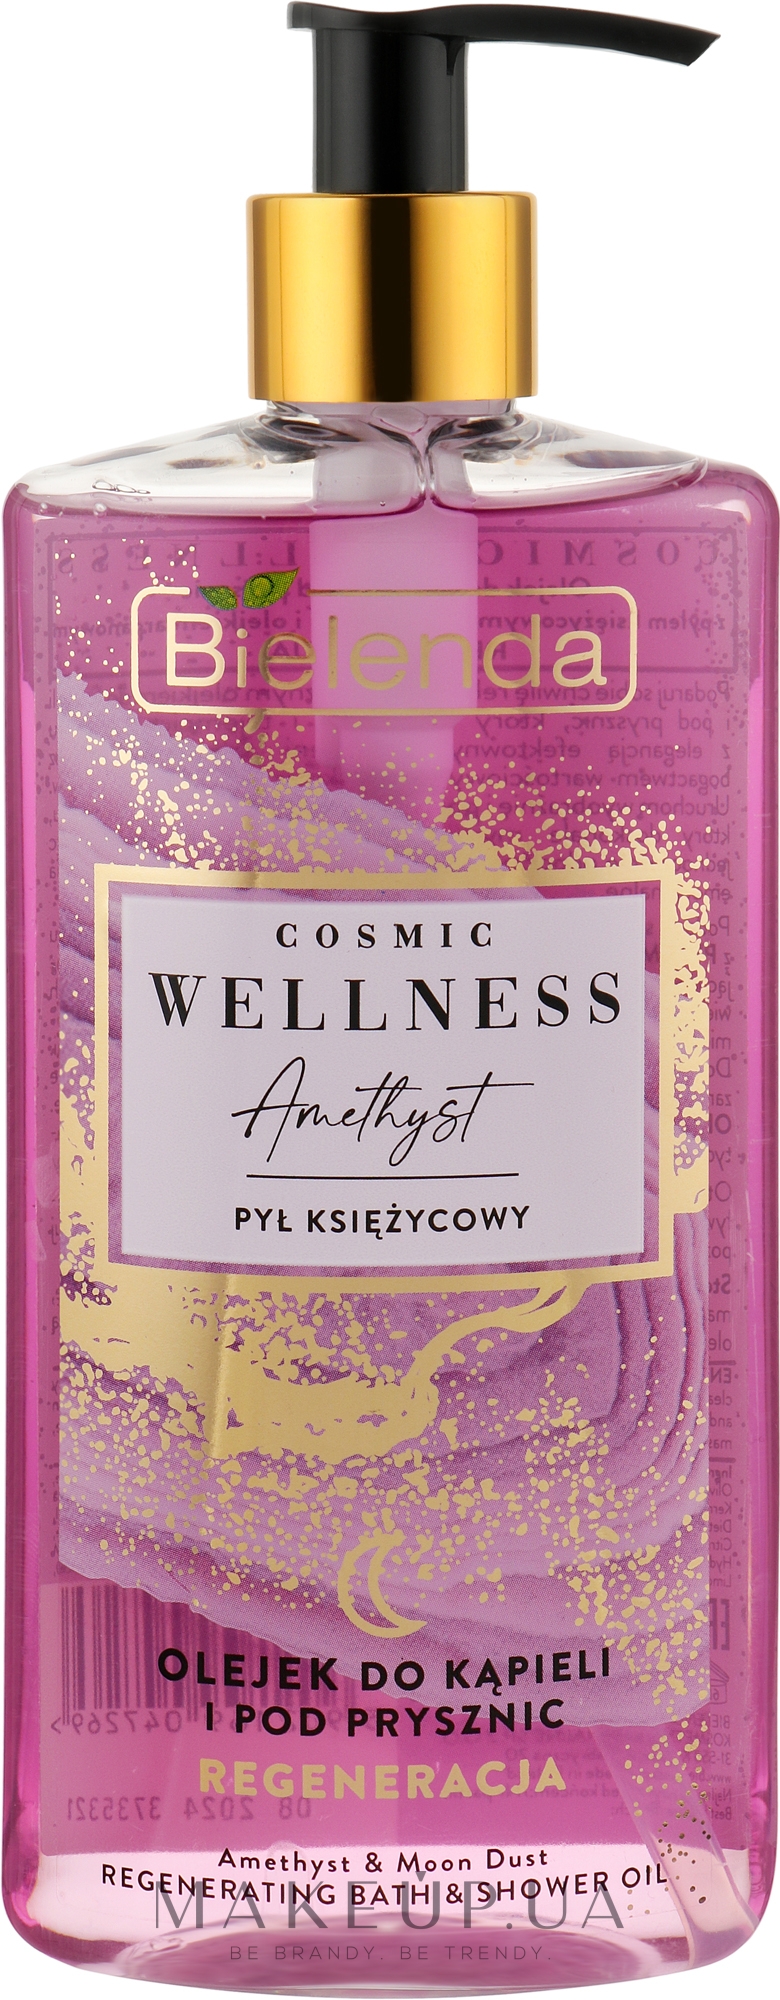 Регенерувальна олія для ванної й душу - Bielenda Cosmic Wellness Amethyst & Moon Dust Regeneratin Bath & Shower Oil — фото 250ml